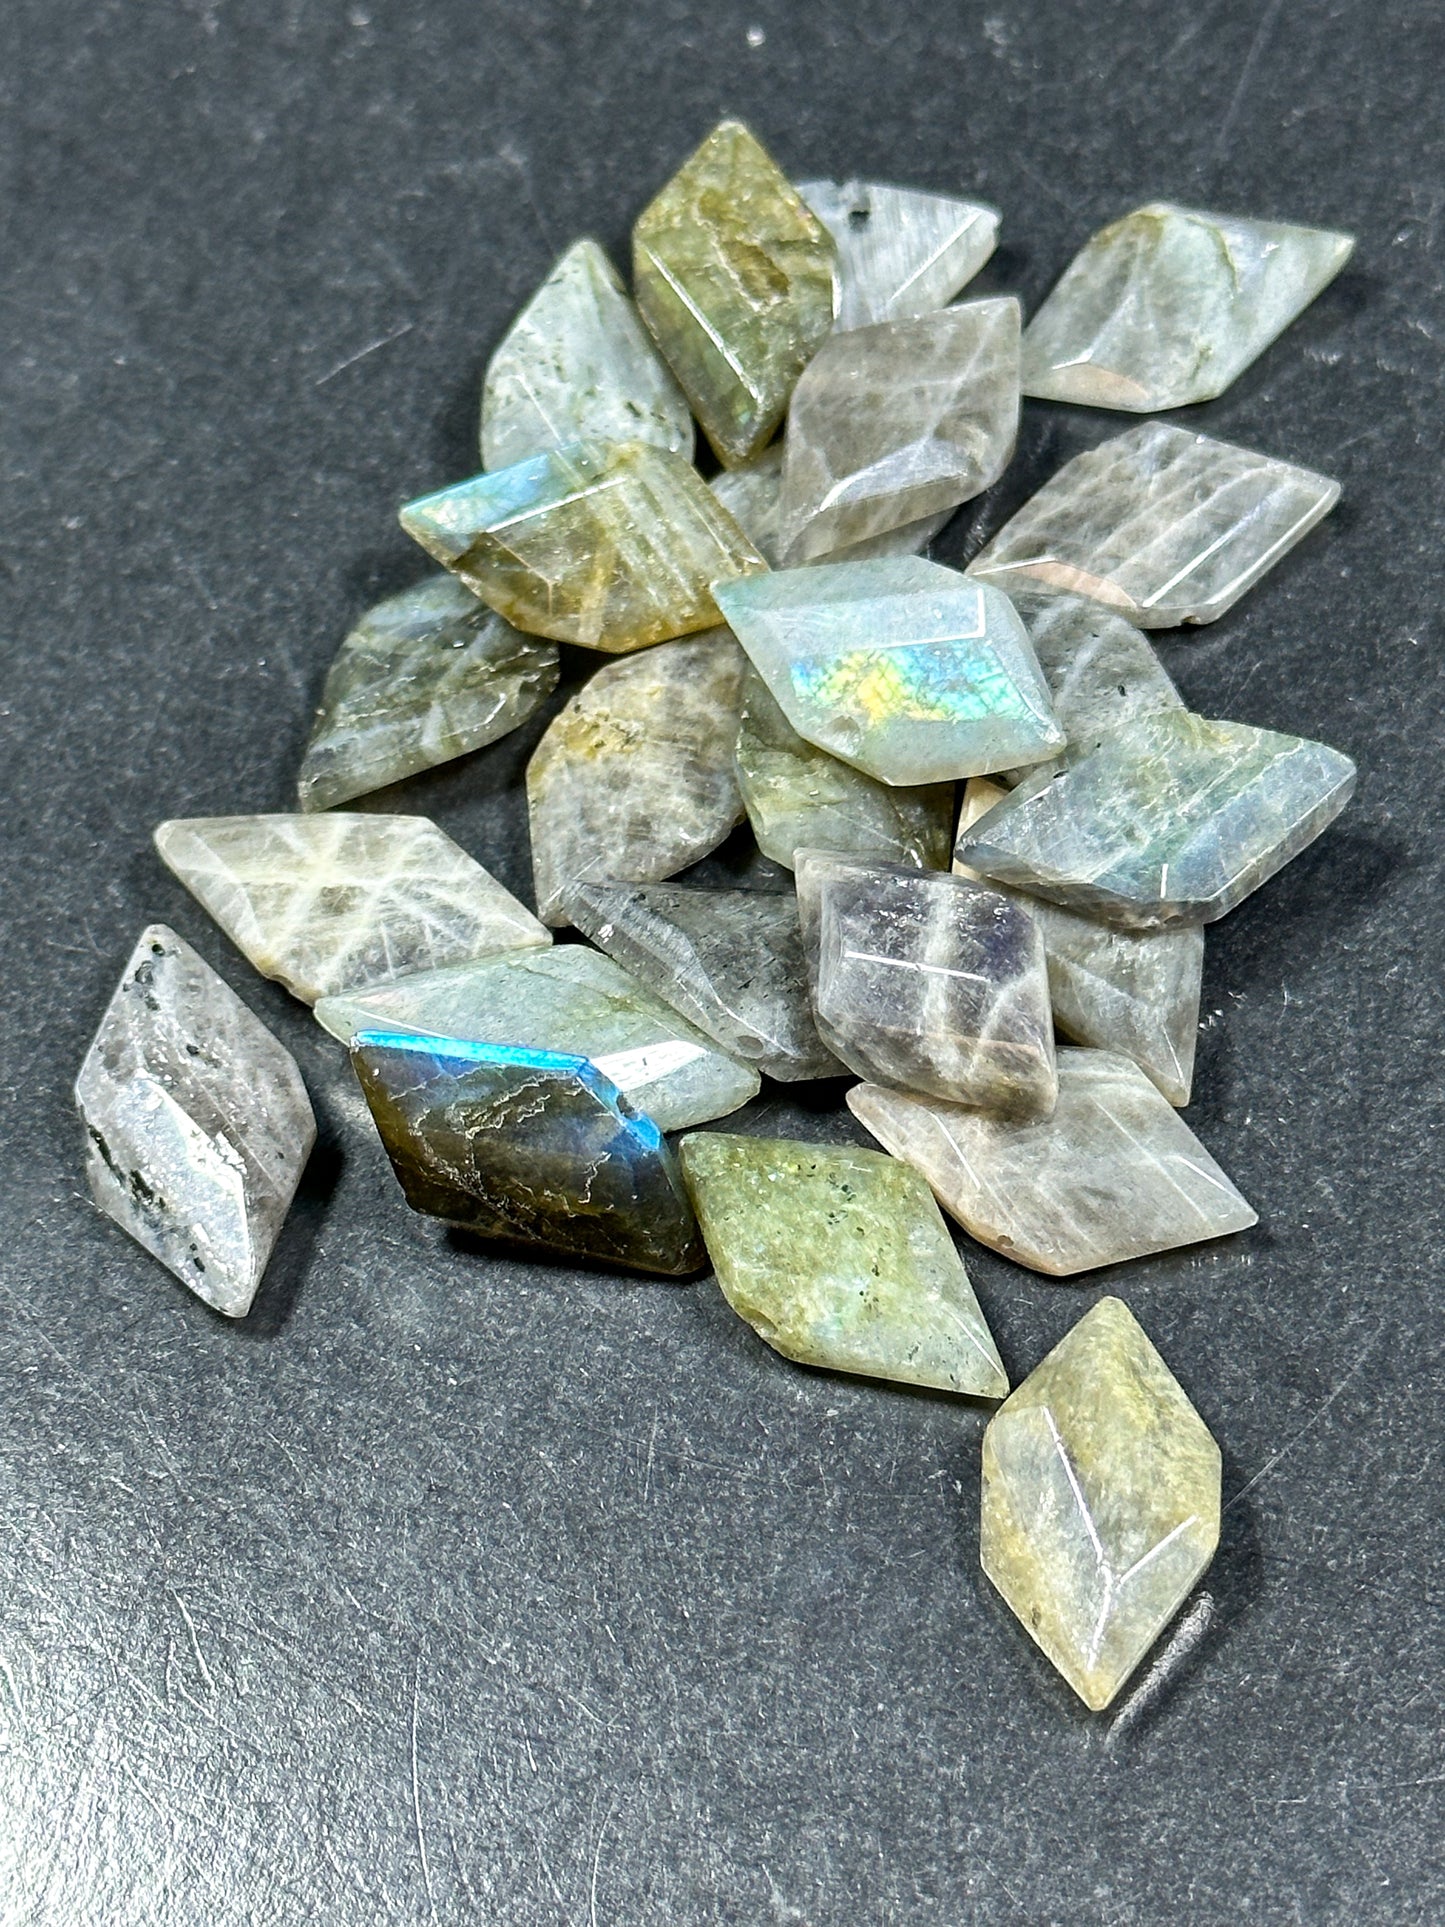 NATURAL Labradorite Gemstone Bead Faceted 24x12mm Diamond Shape Bead, Beautiful Natural Gray with Blue Rainbow Flash Color LOOSE Labradorite